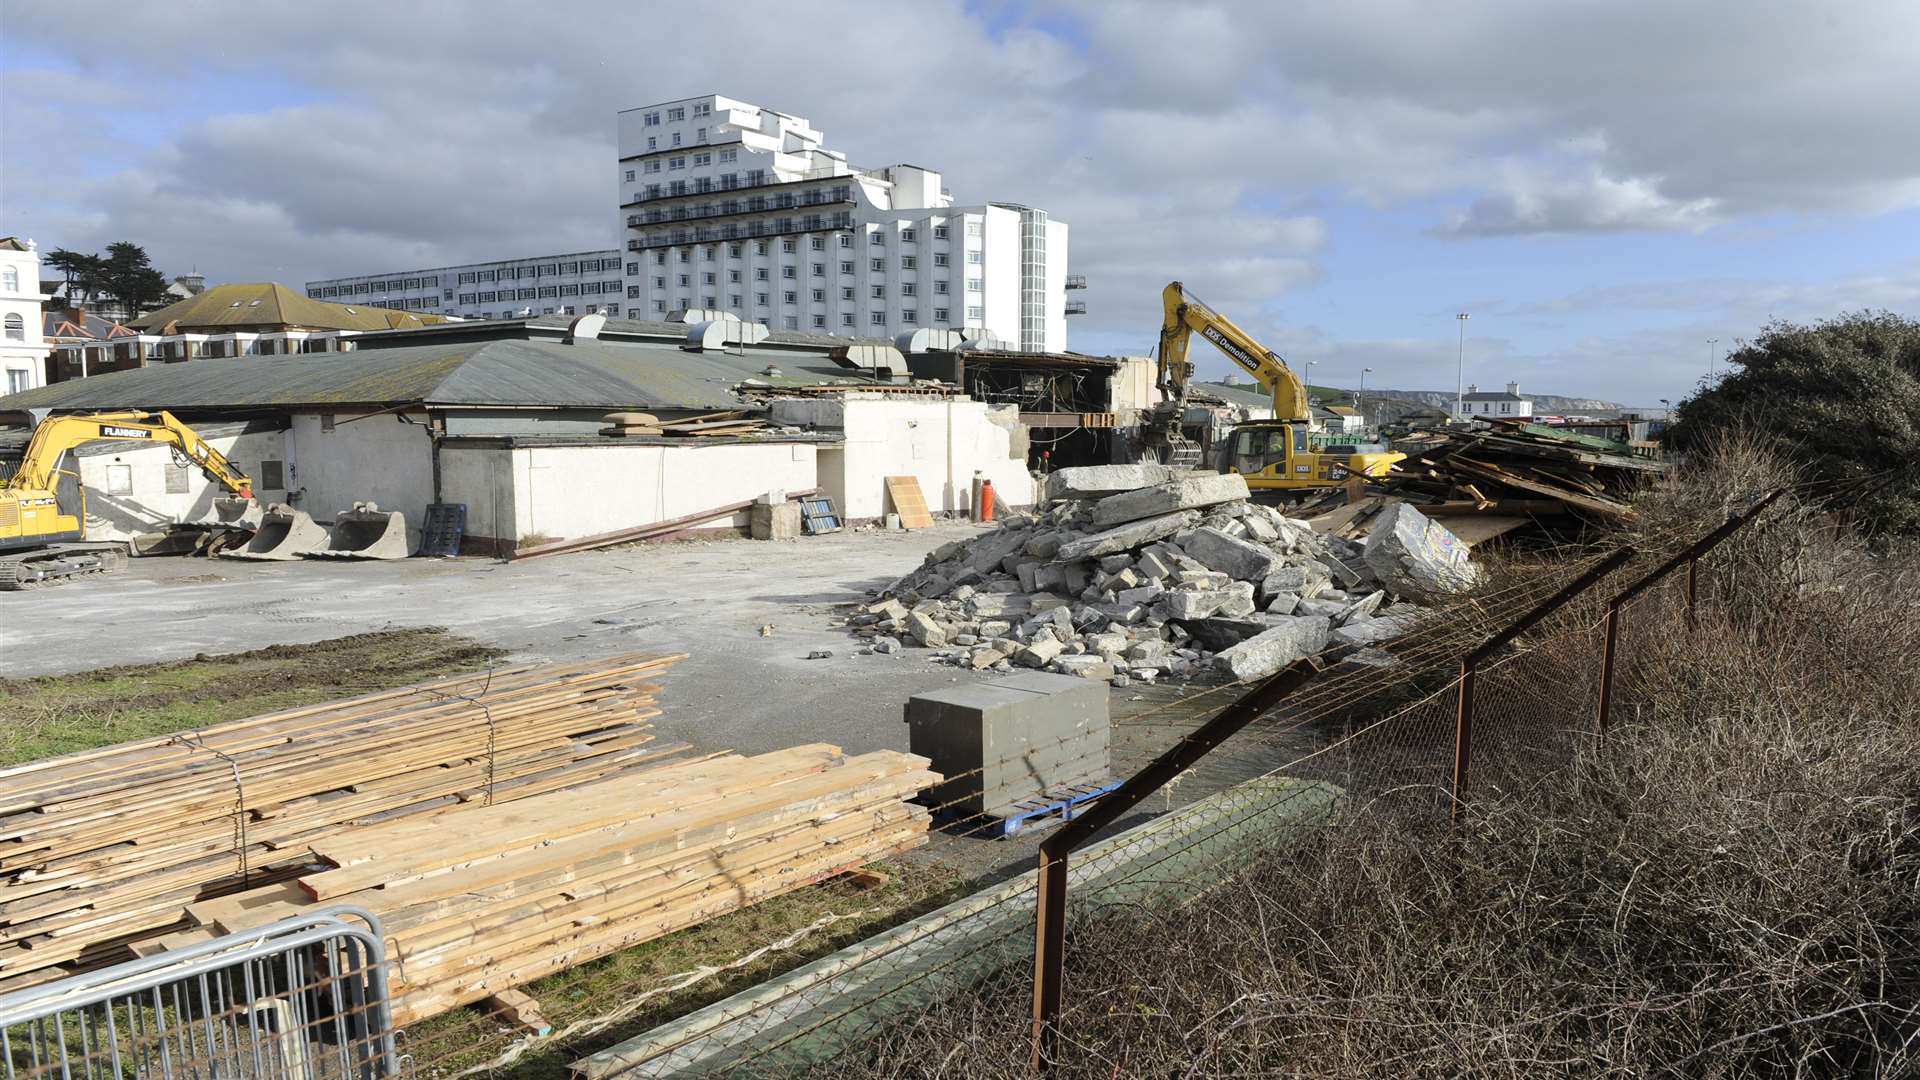 Work has started on knocking down the former Priz nightclub in Folkestone. Picture: Tony Flashman